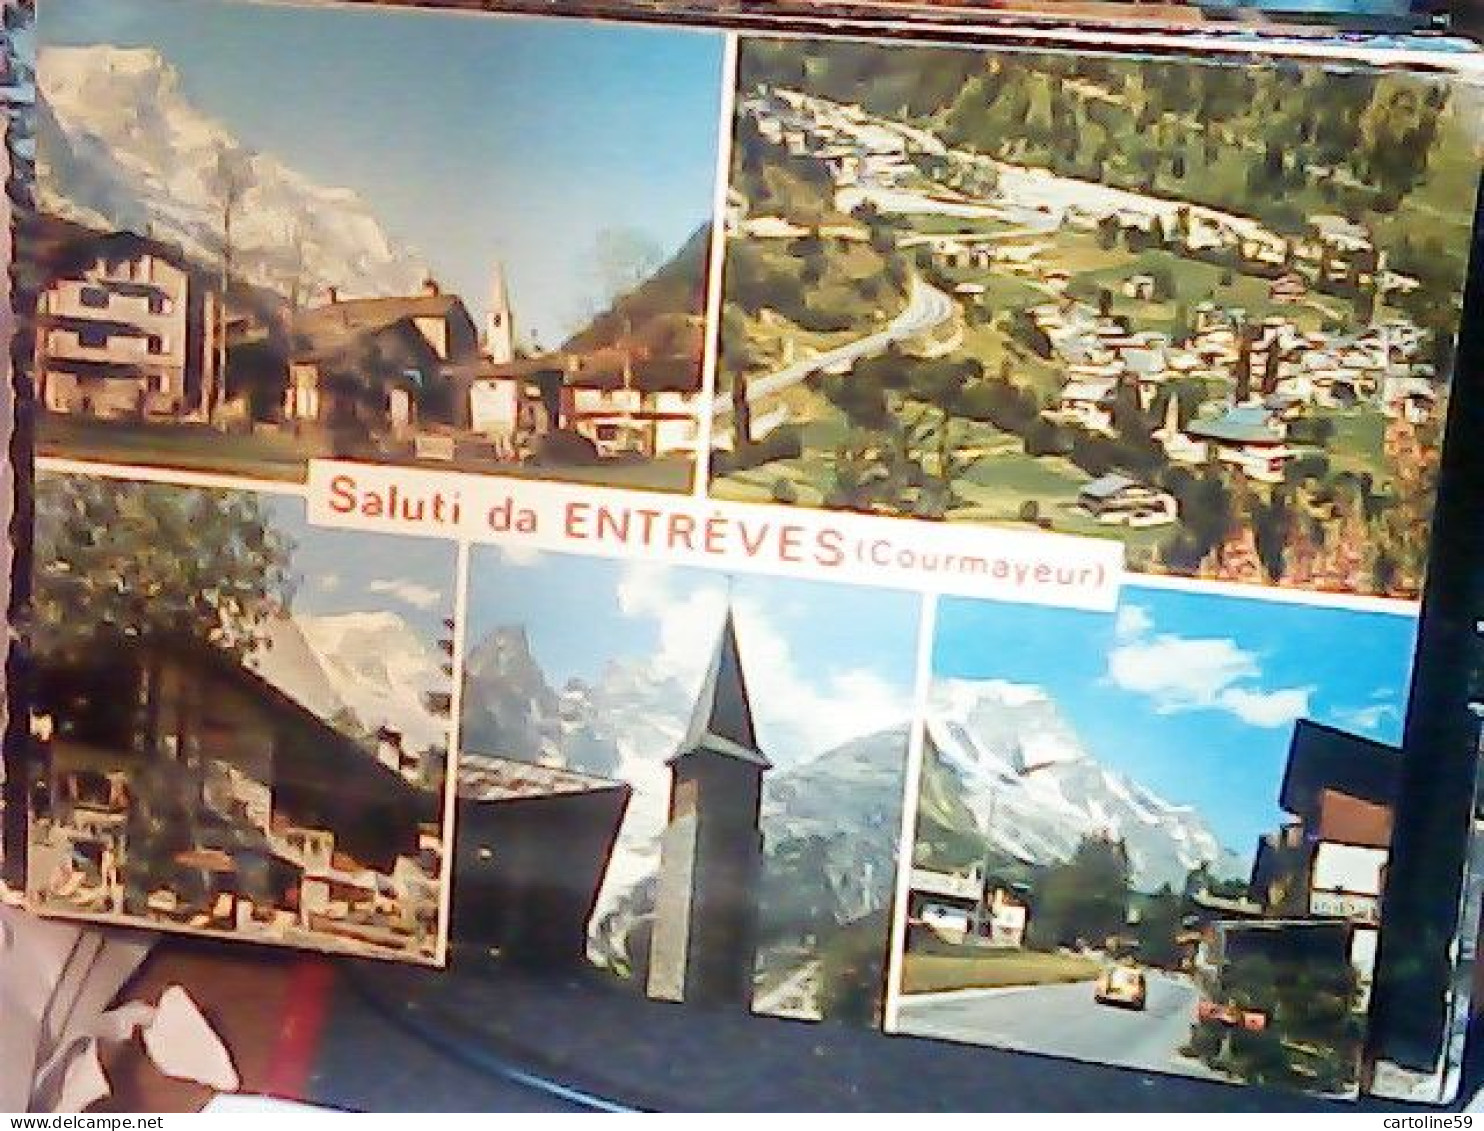 106 CARD cards Val d'Aosta:vrie localita LOTTO BELLO  VBN1935< JV6514